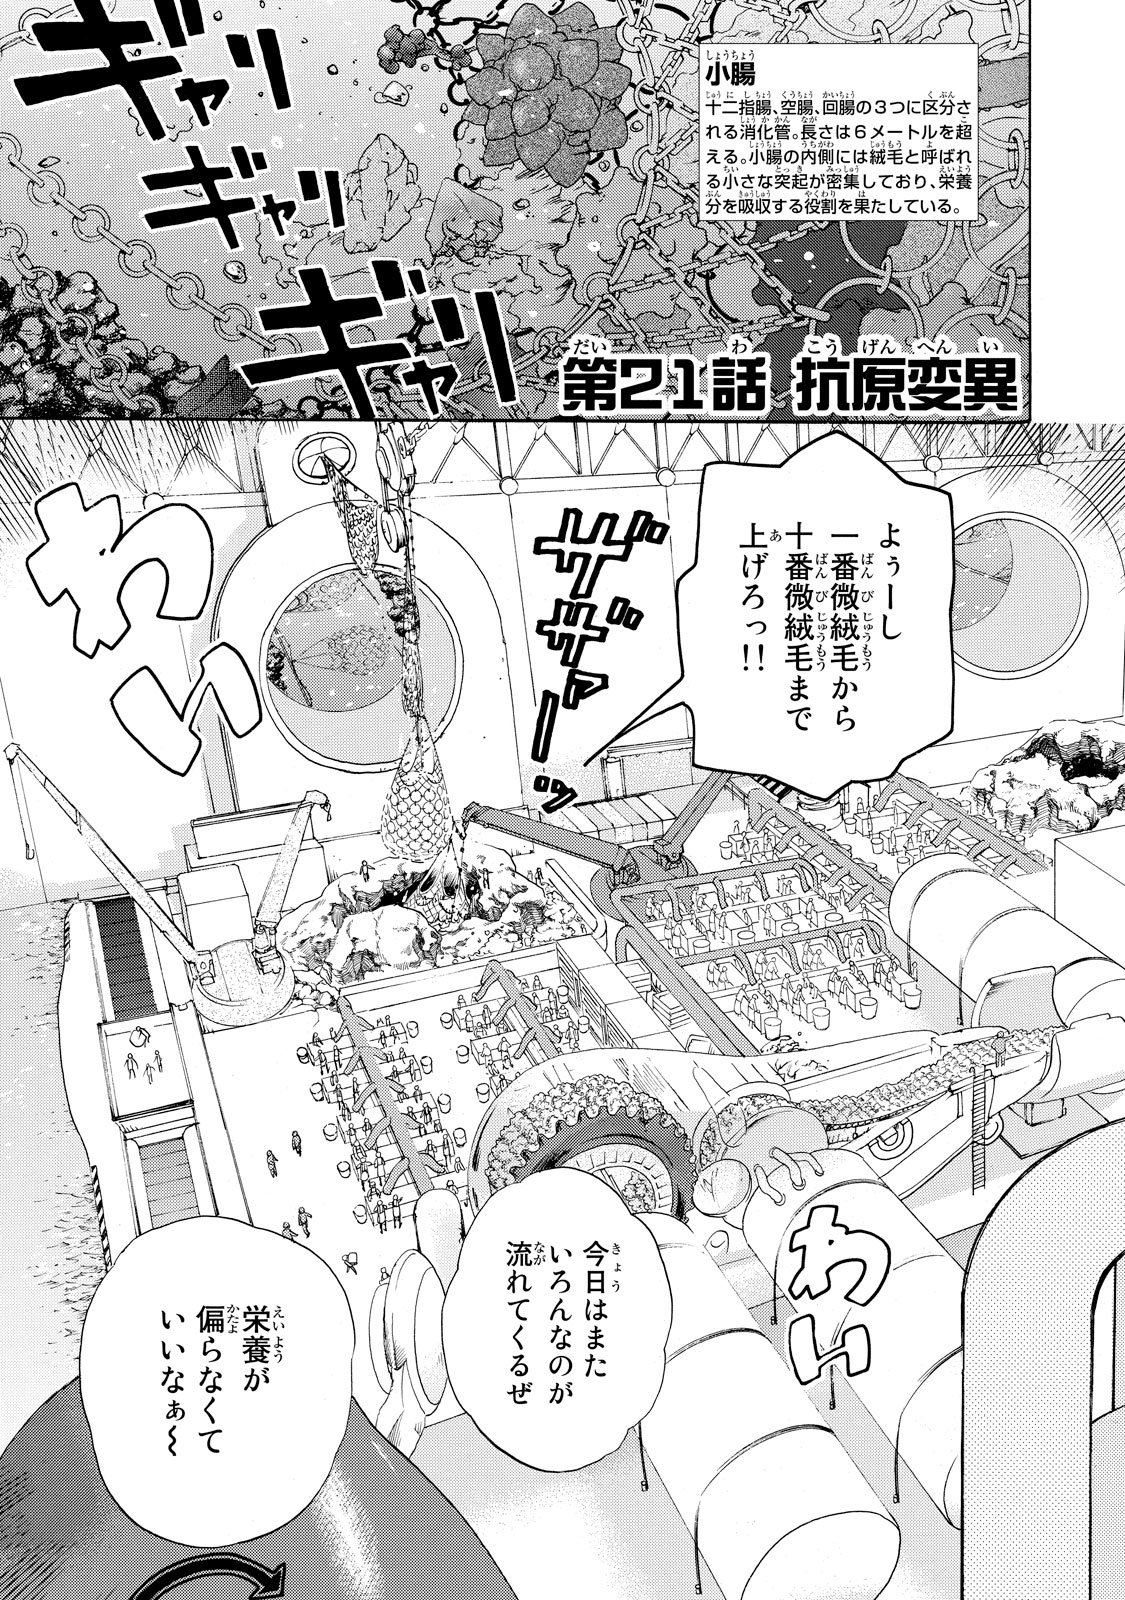 Hataraku Saibou - Chapter 21 - Page 1